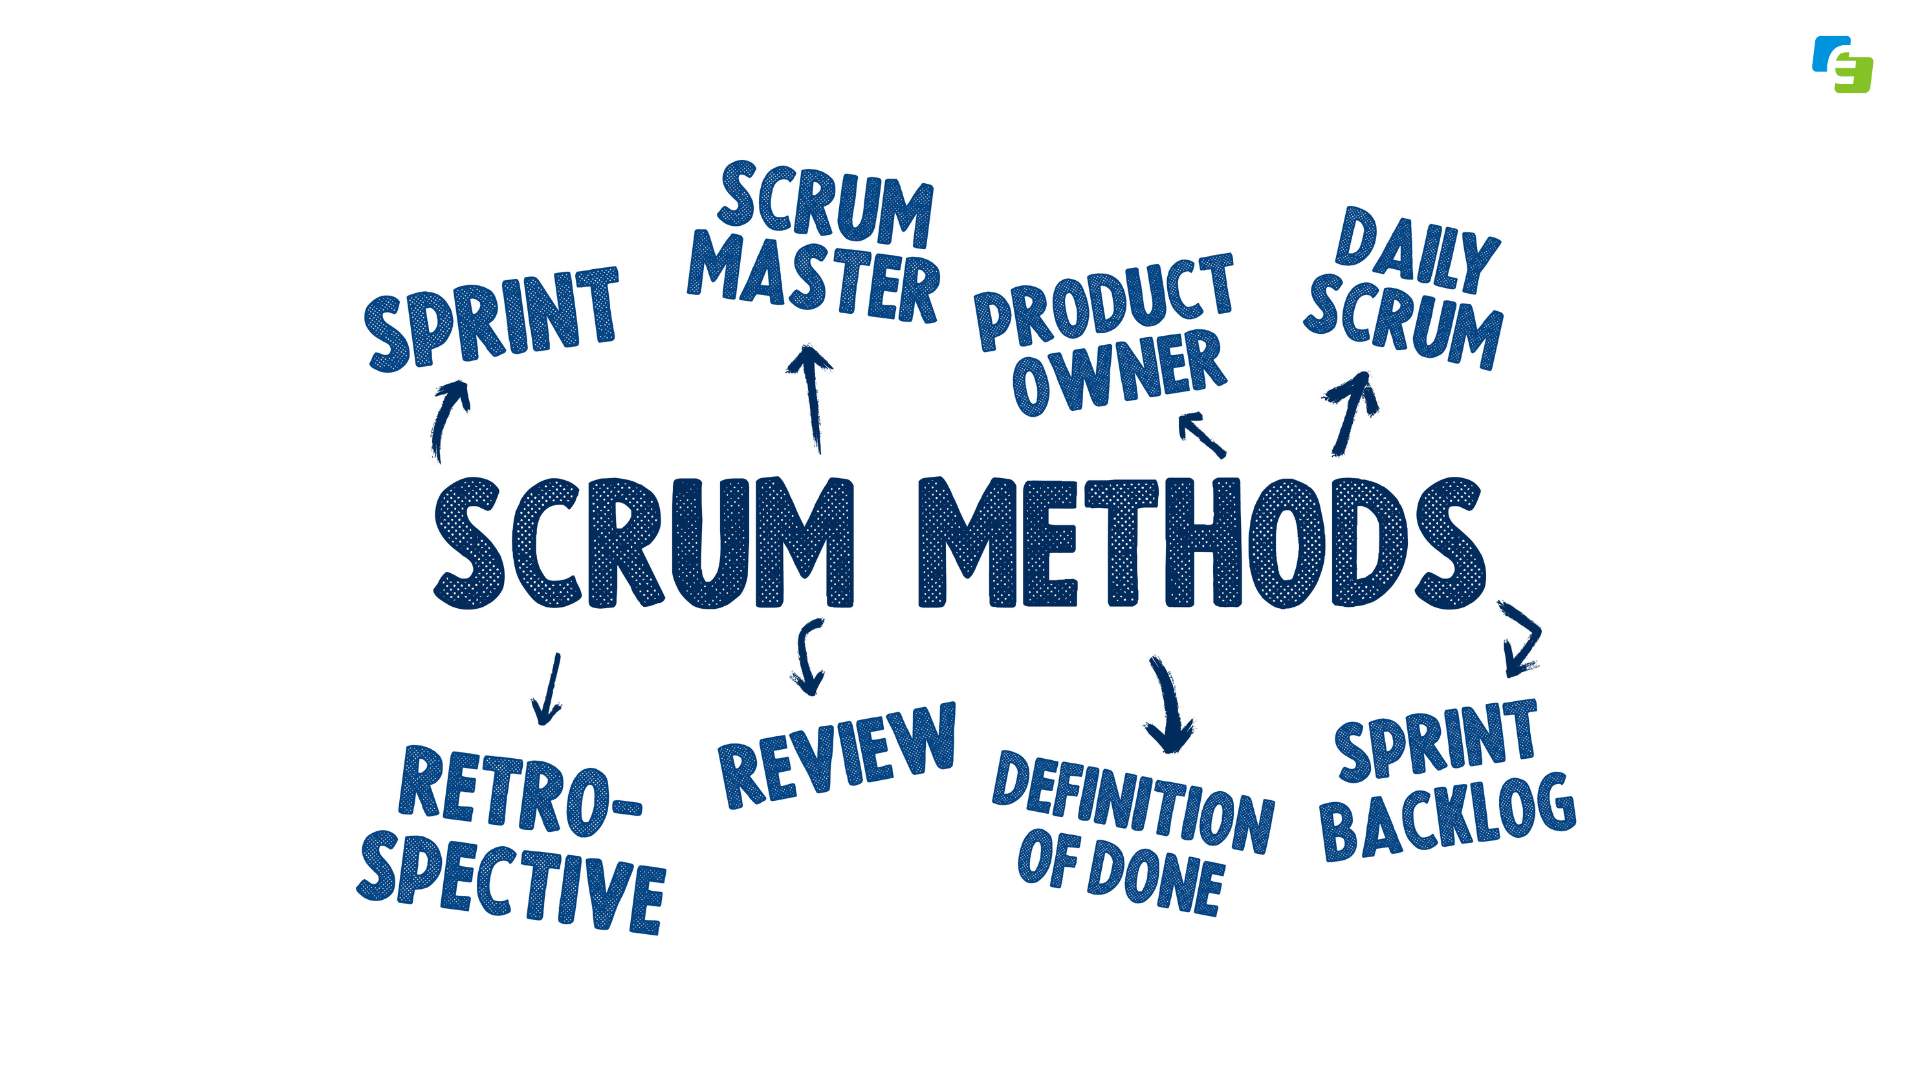 Image of Scrum Framework and Methods